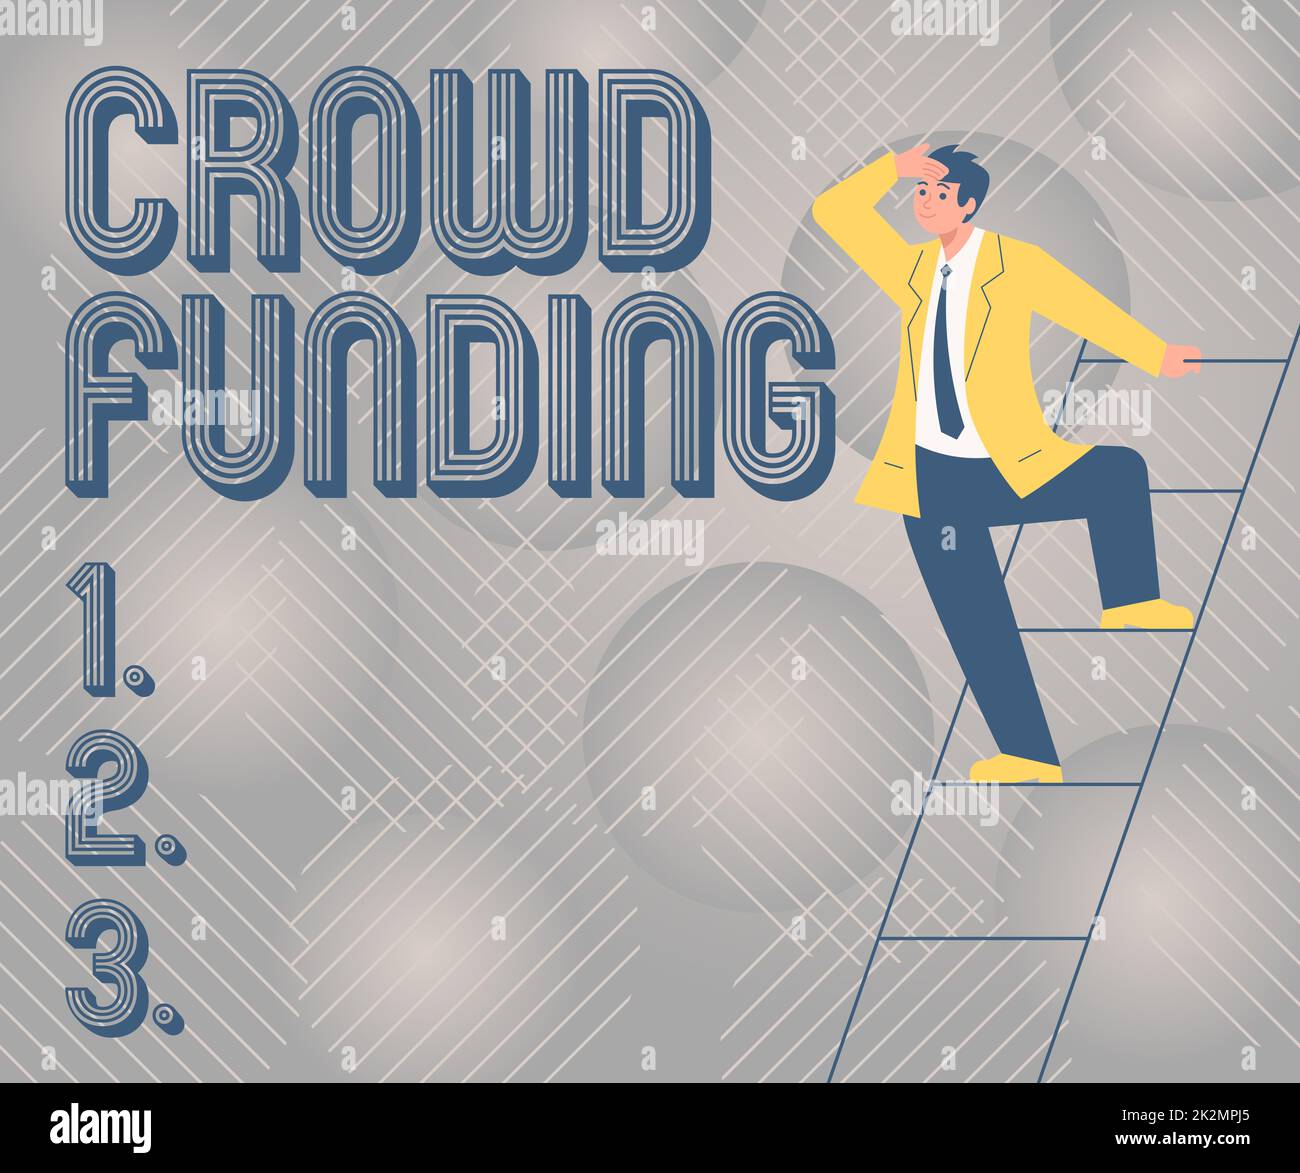 Sign displaying Crowd Funding. Internet Concept Fundraising Kickstarter Startup Pledge Platform Donations Gentleman In Suit Standing Ladder Searching Latest Plan Ideas. Stock Photo